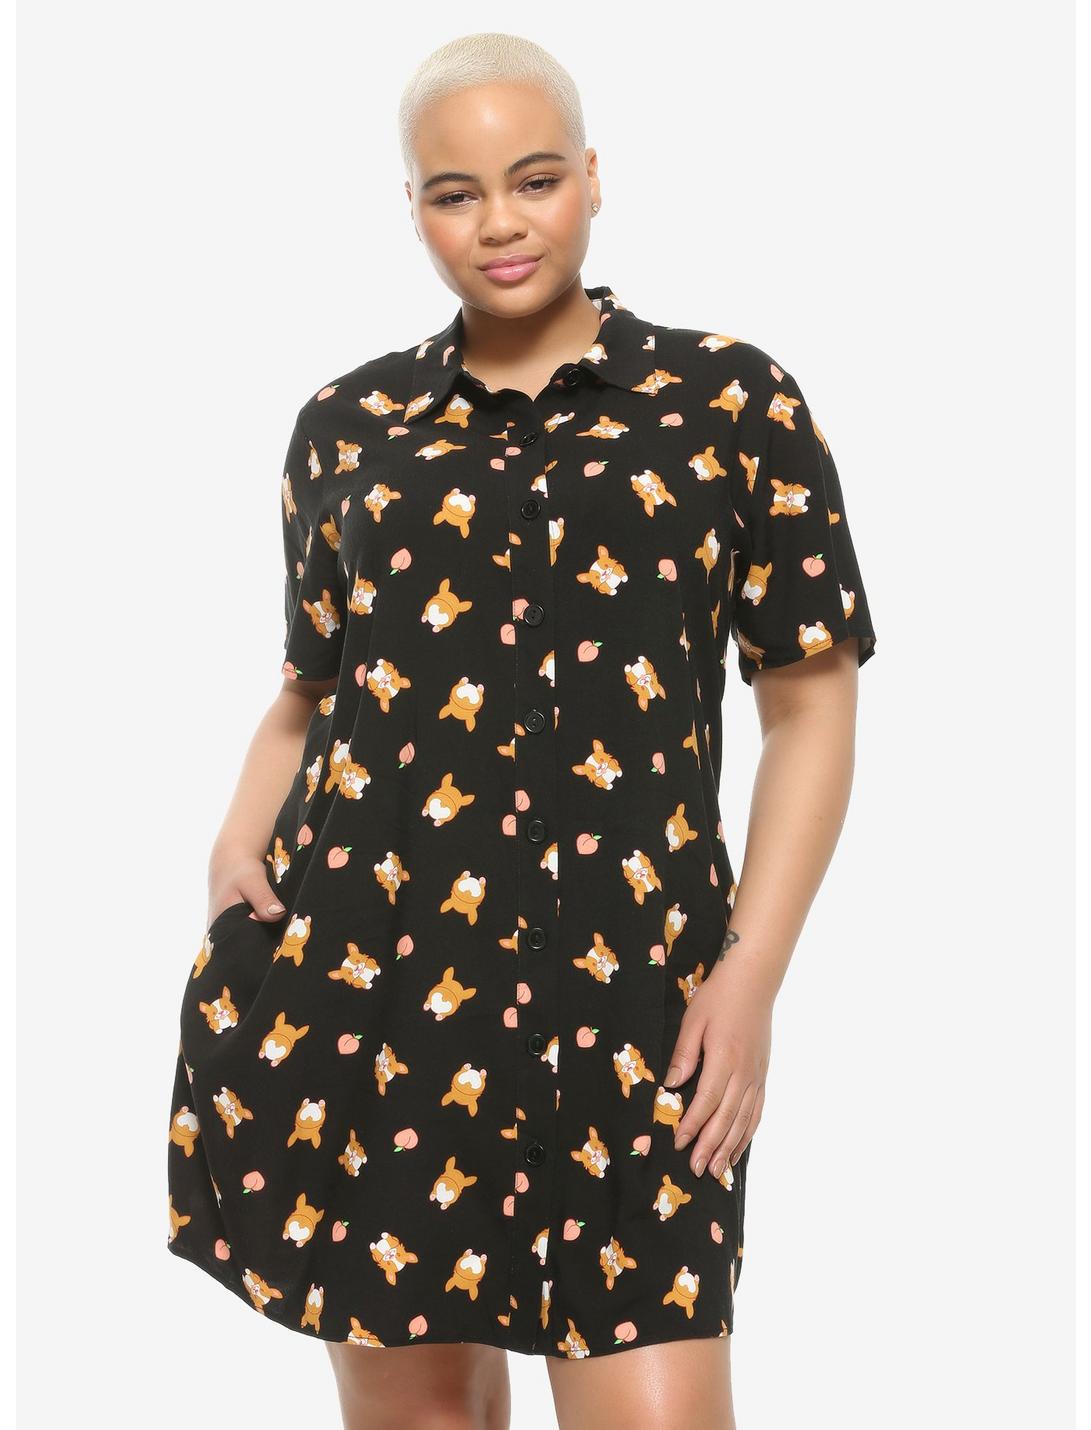 Corgi & Peach Woven Button-Up Dress Plus Size, BLACK, hi-res